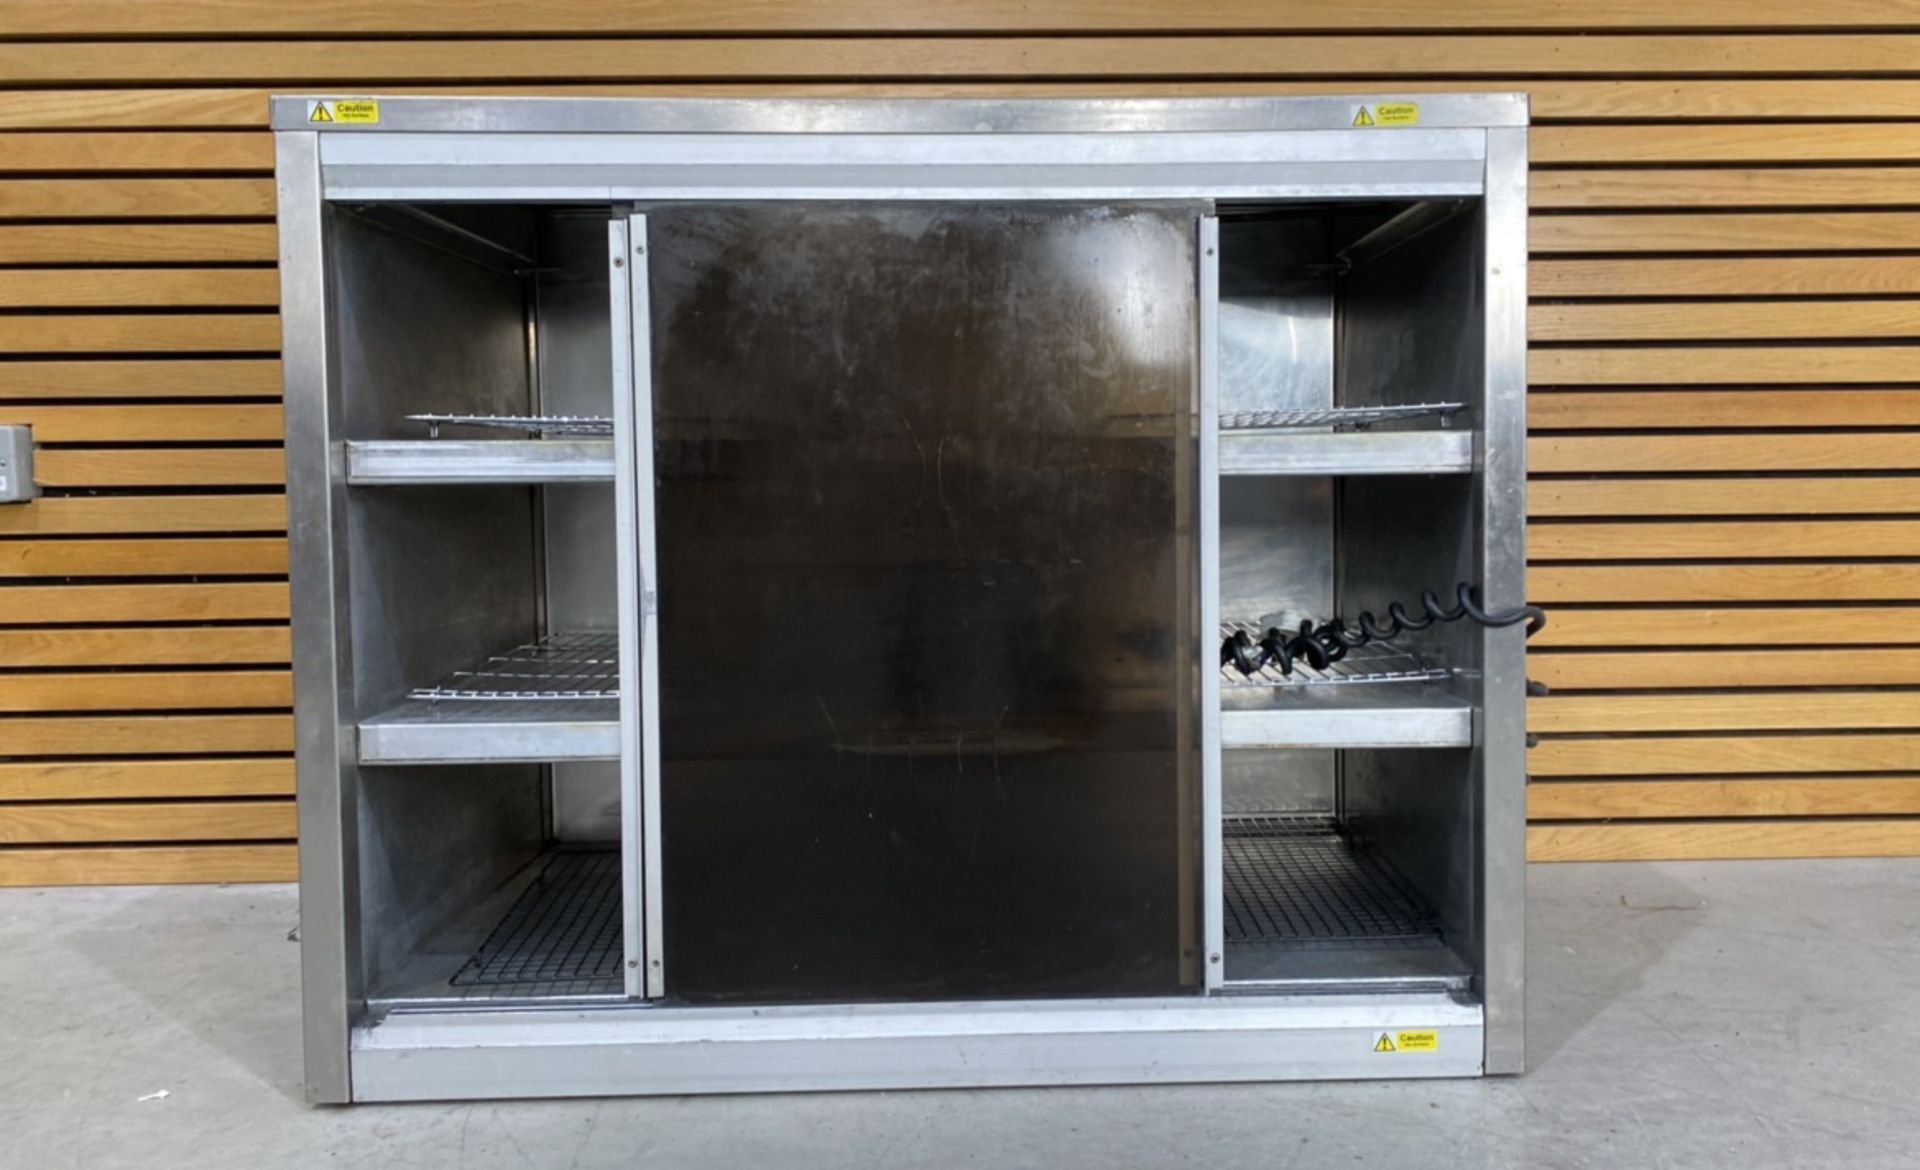 Grundy Display Warming Cabinet